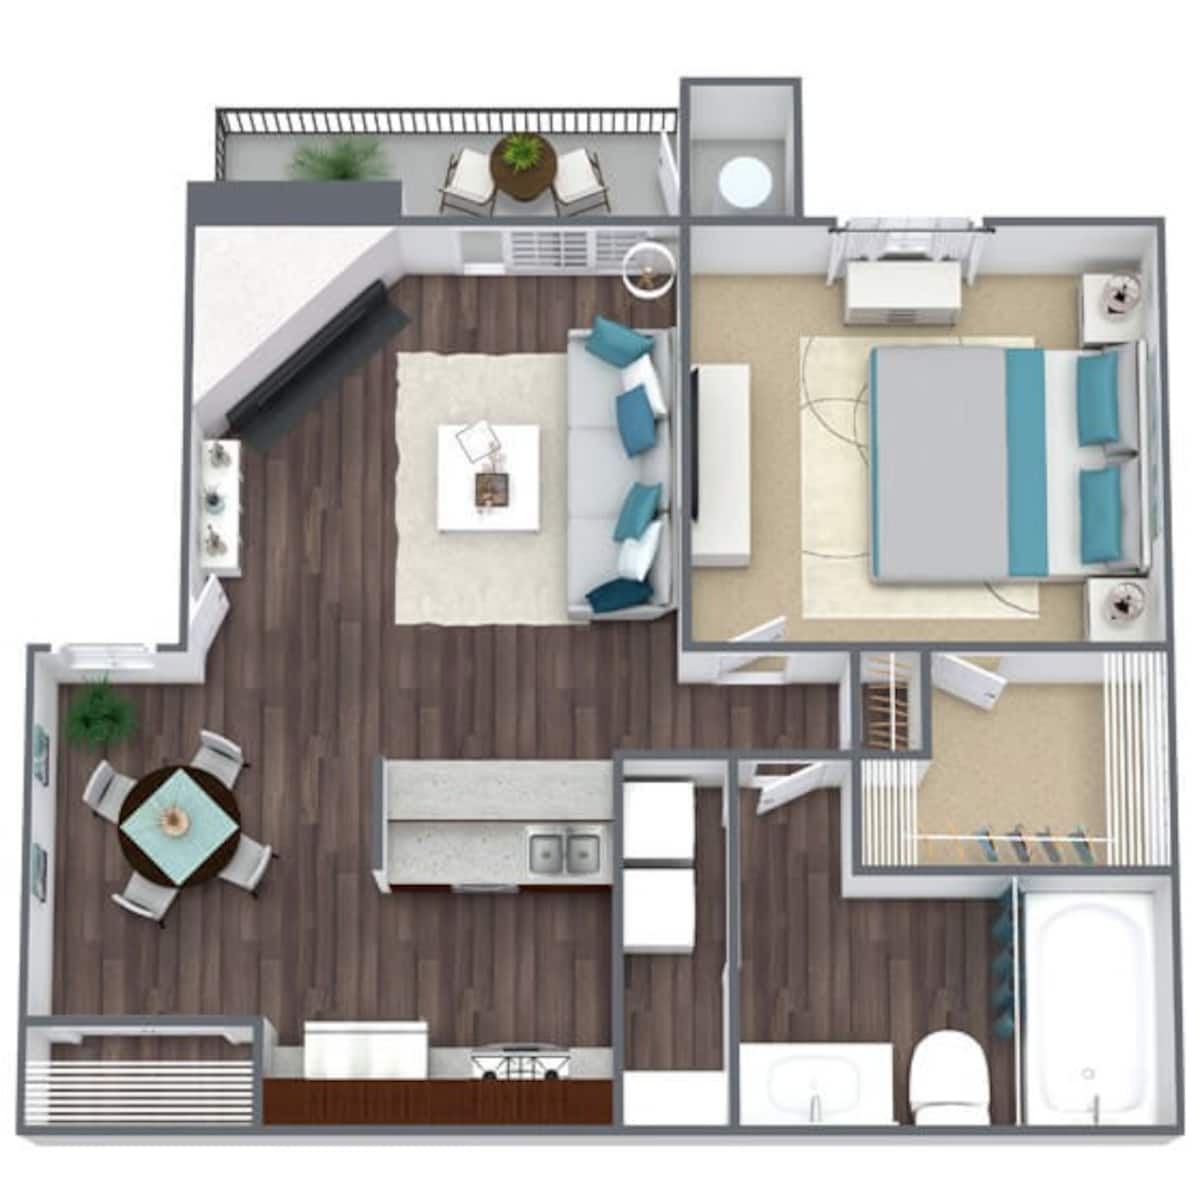 Floorplan diagram for Onyx, showing 1 bedroom